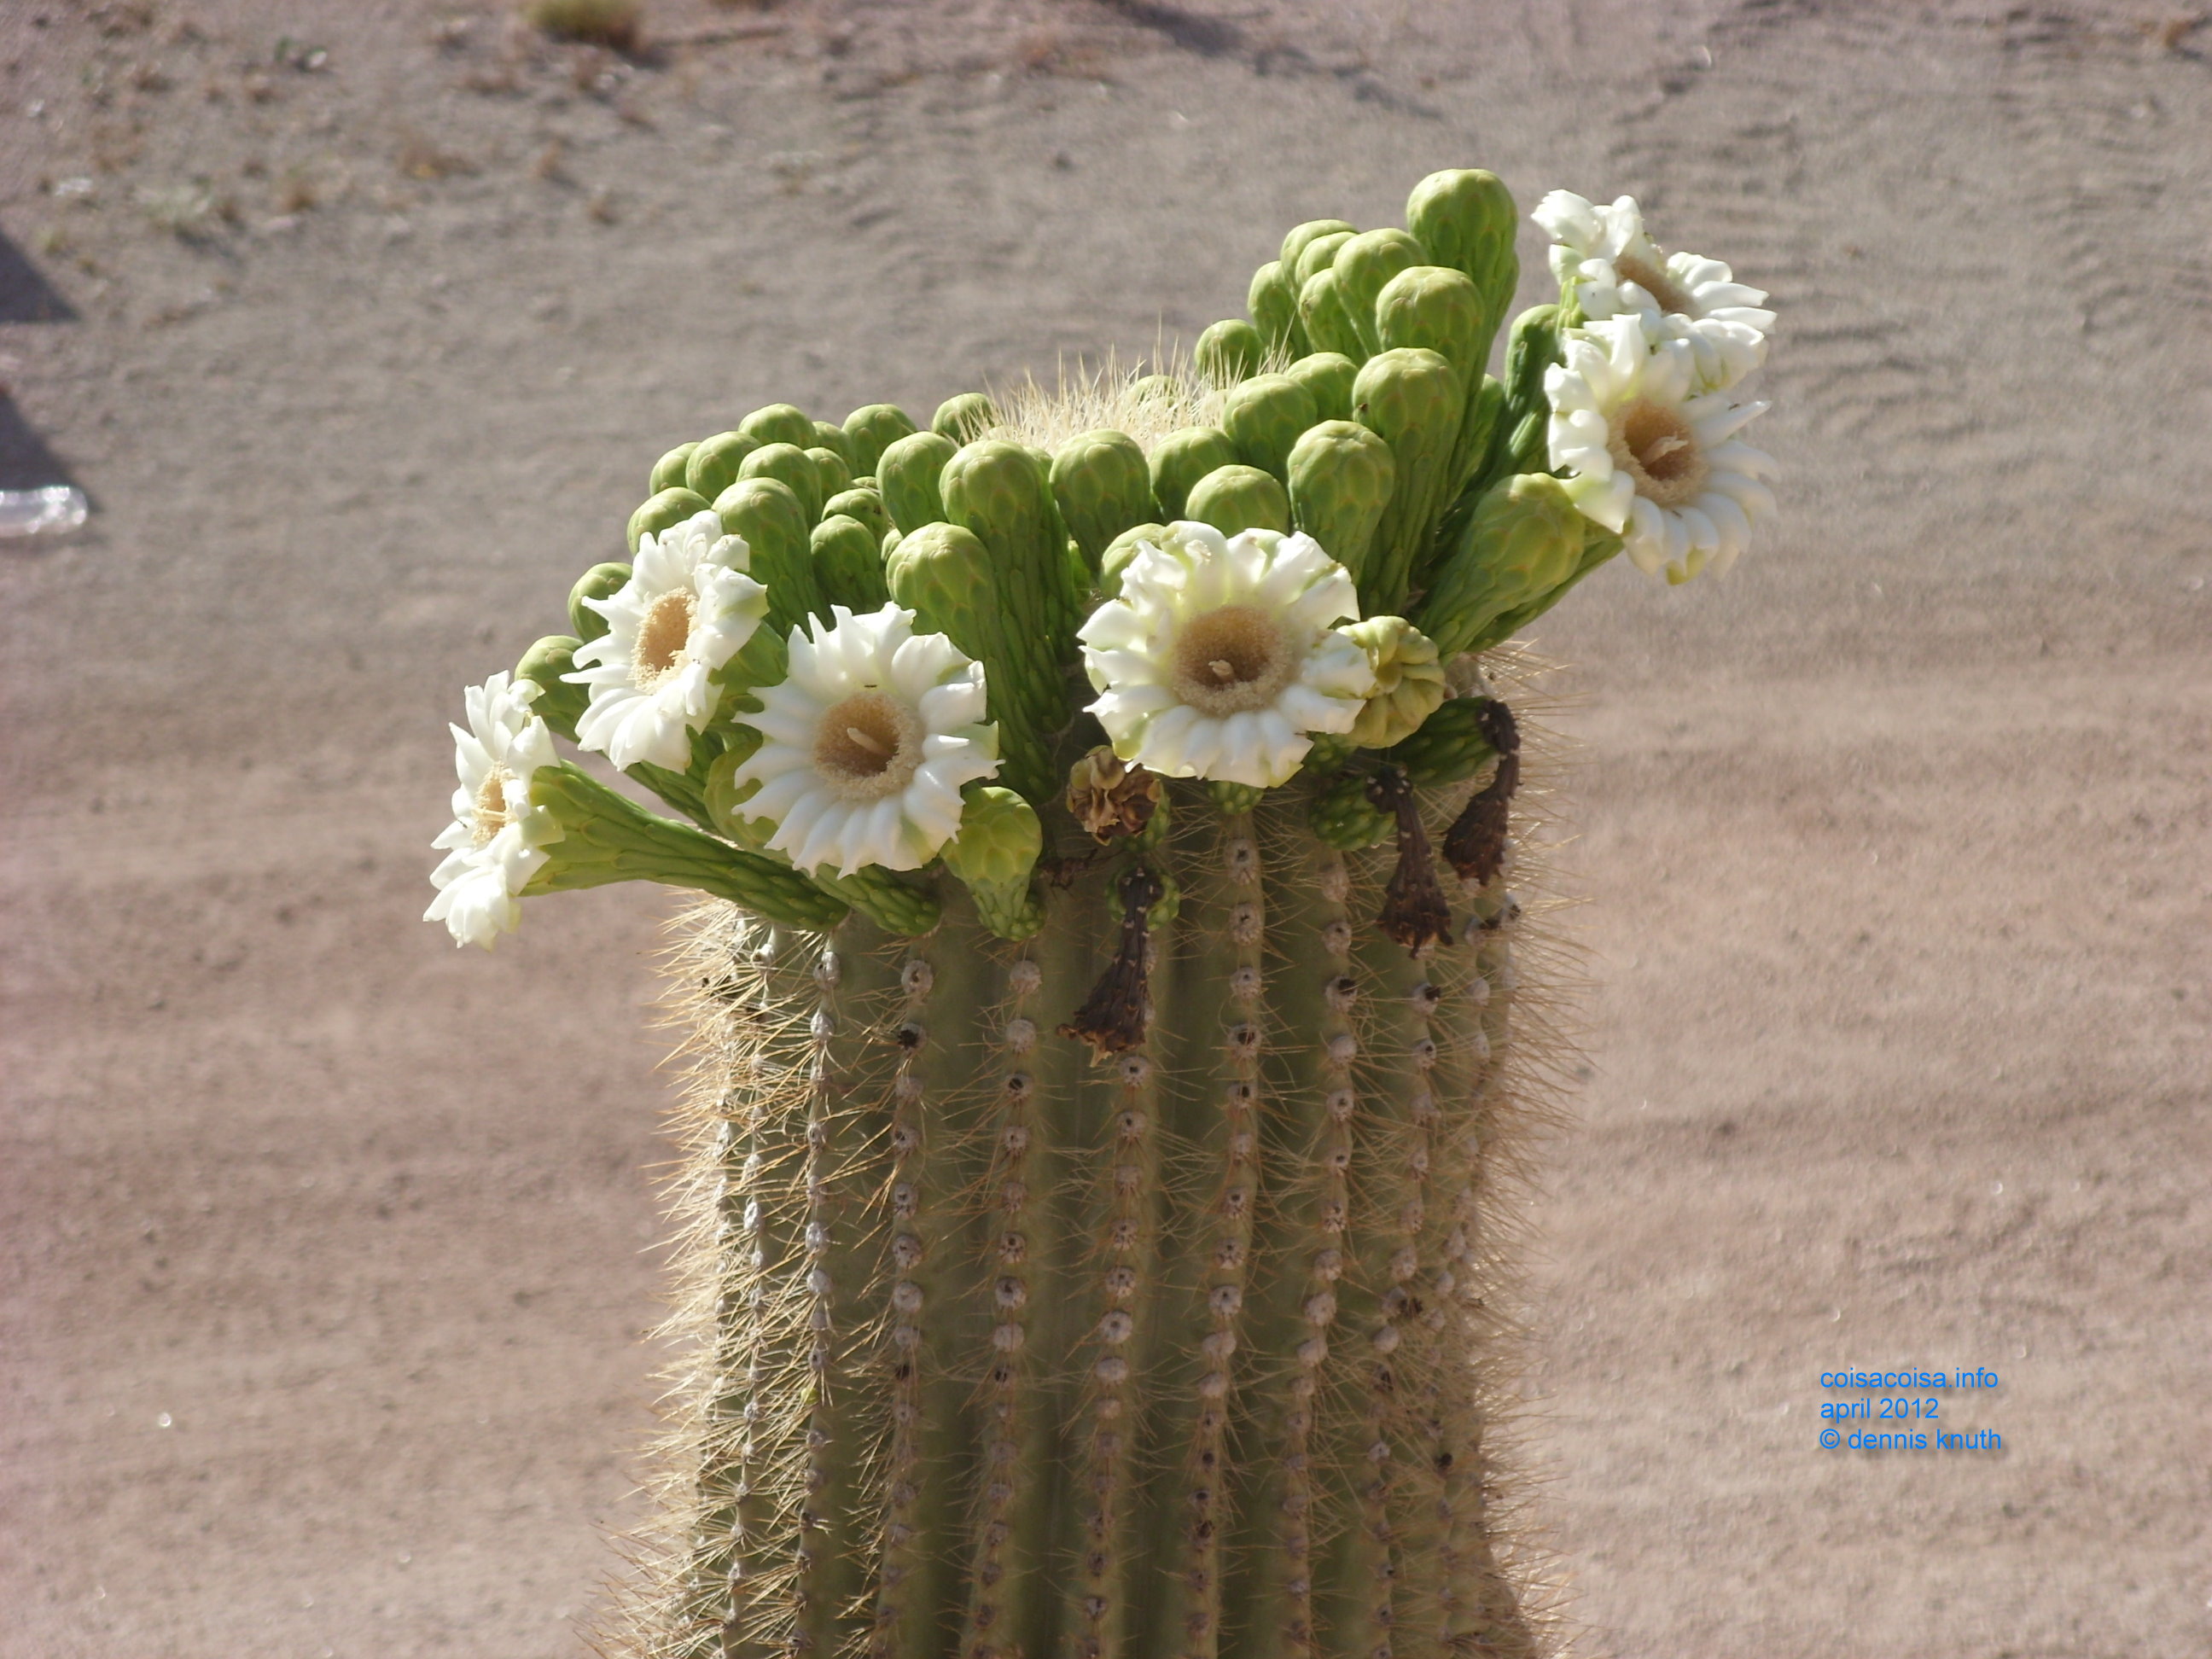 Saguaro Cactus flowers in Apache Junction